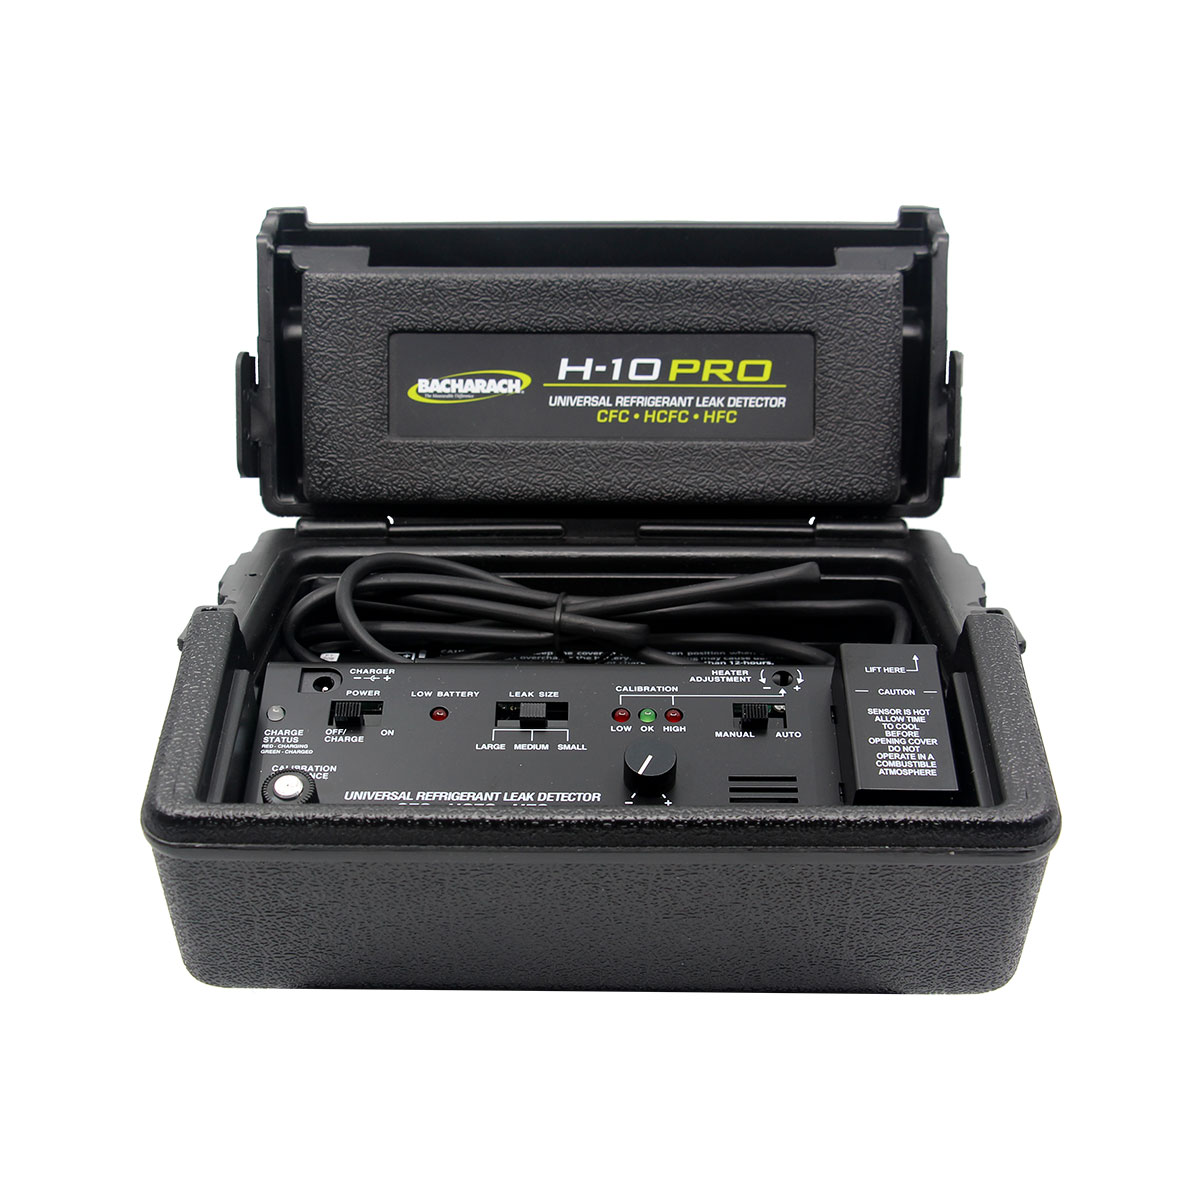 Kältemittelleckdetektor H-10 PRO für模具＂loading=